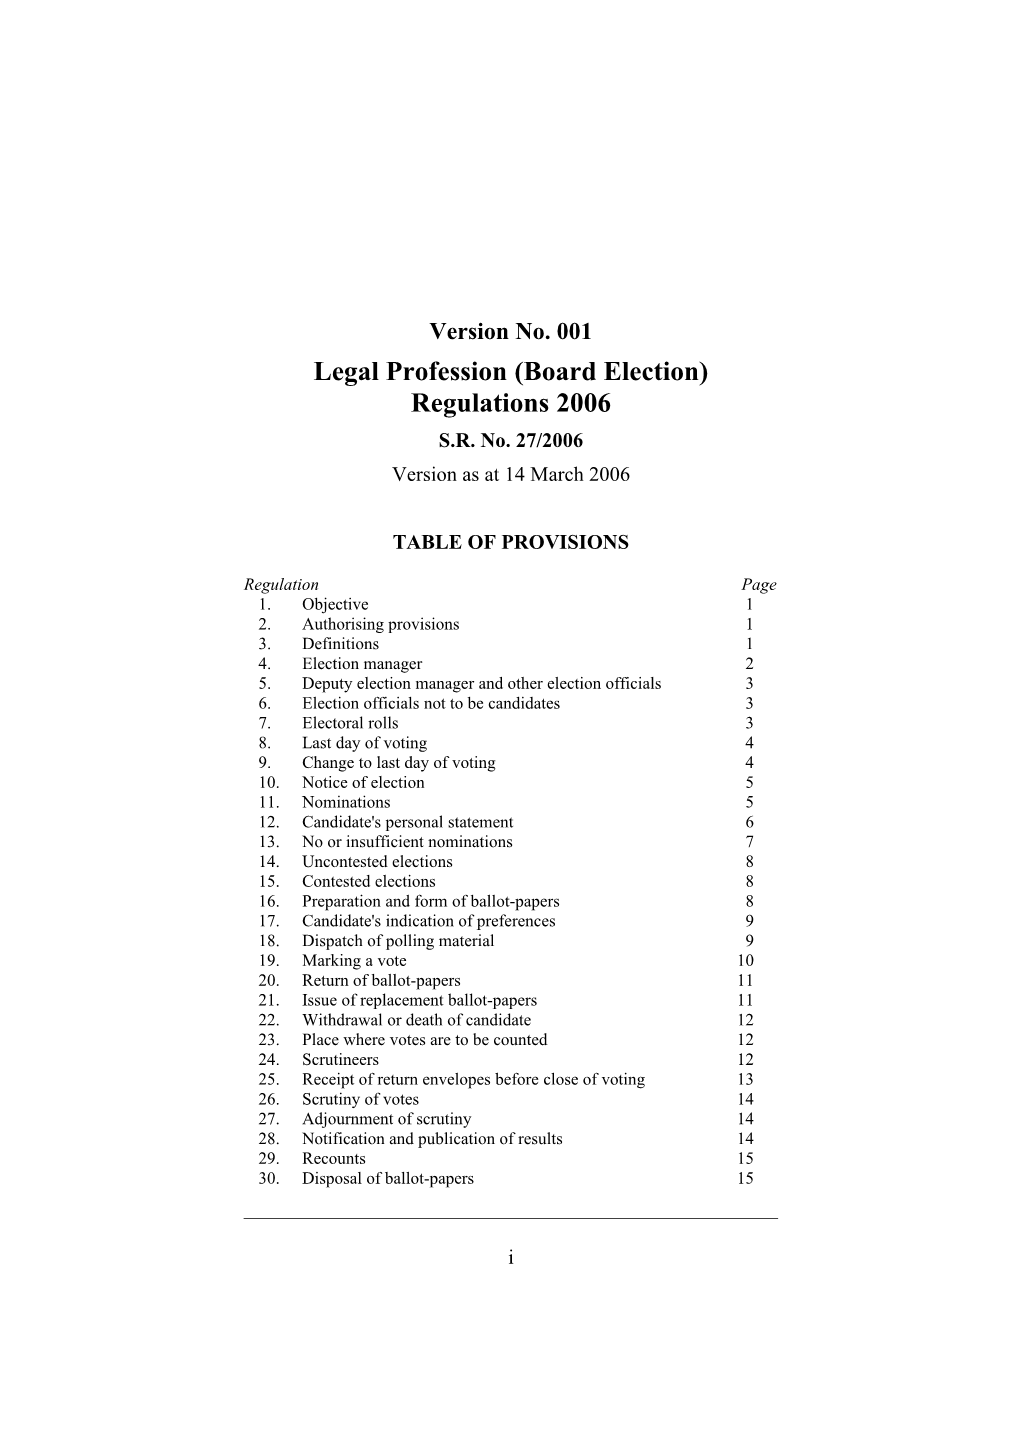 Legal Profession (Board Election) Regulations 2006